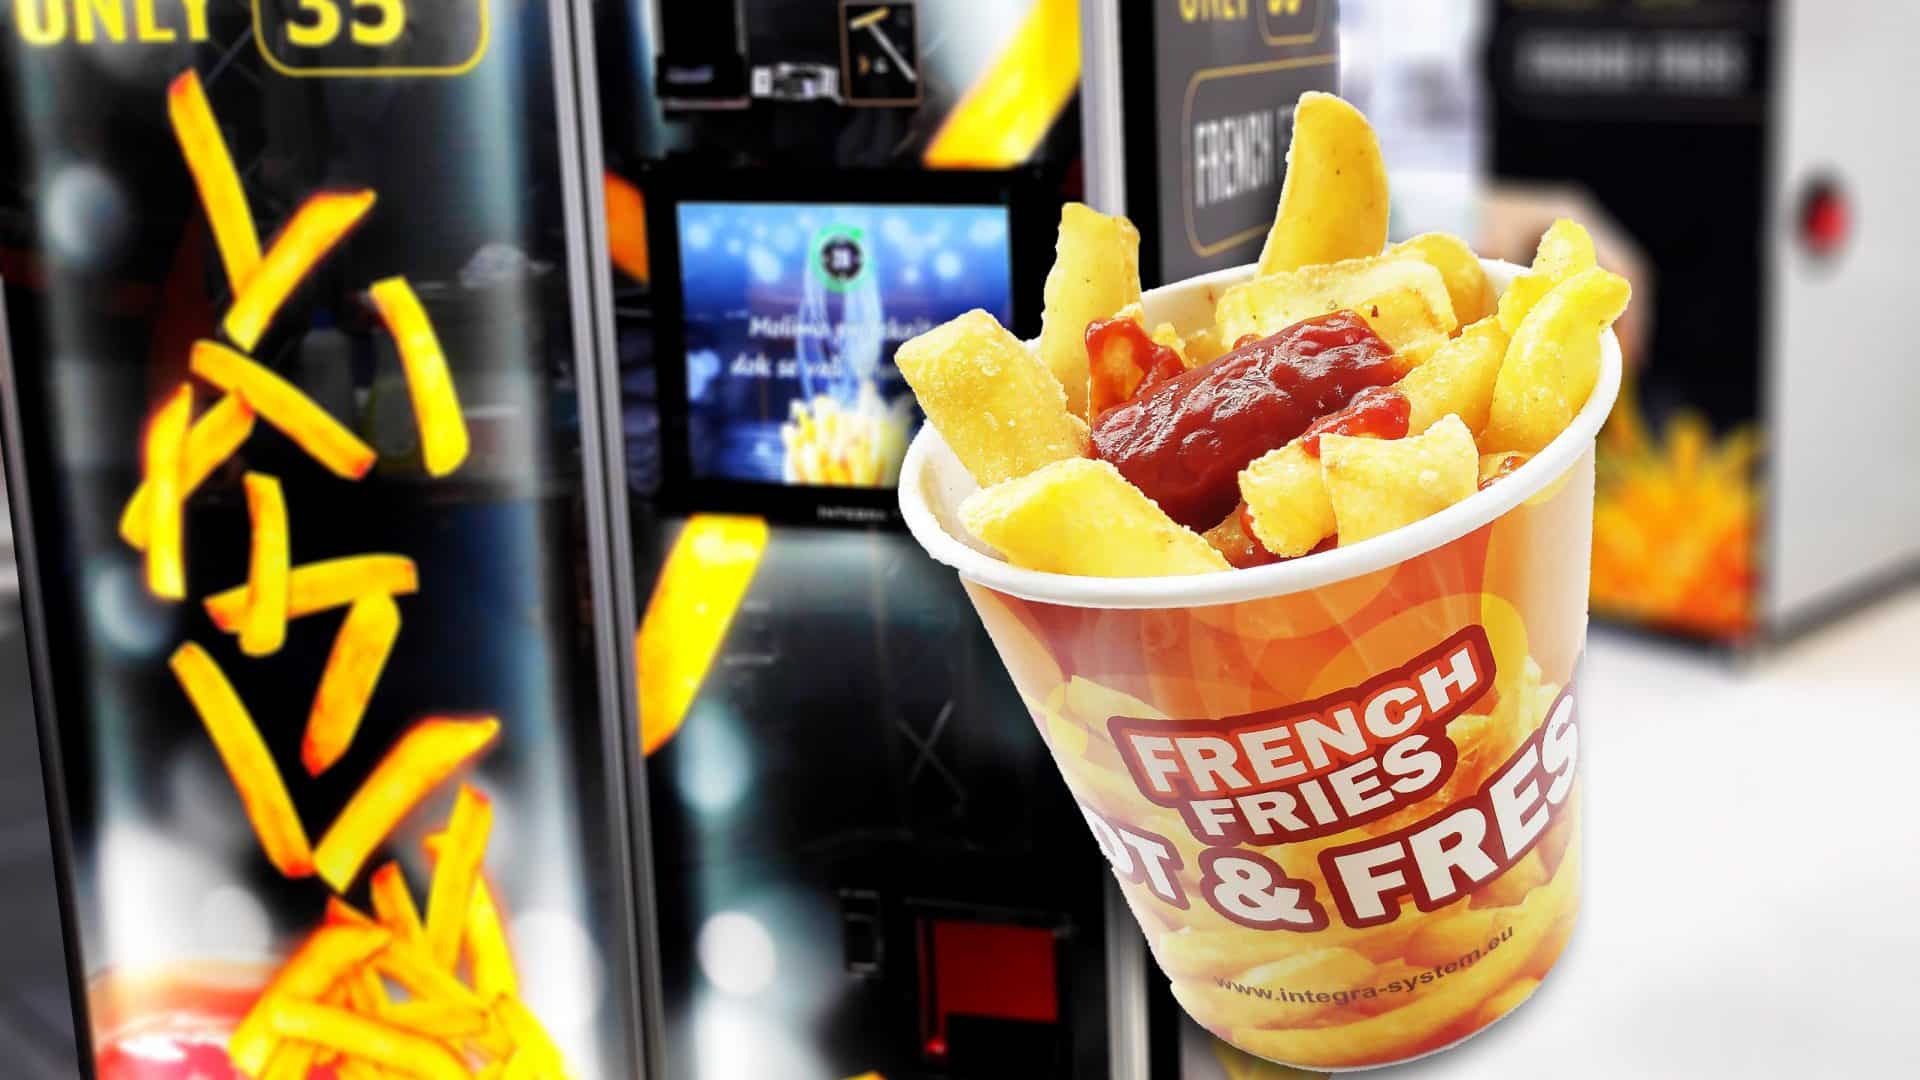 French Fries Vending Machine 